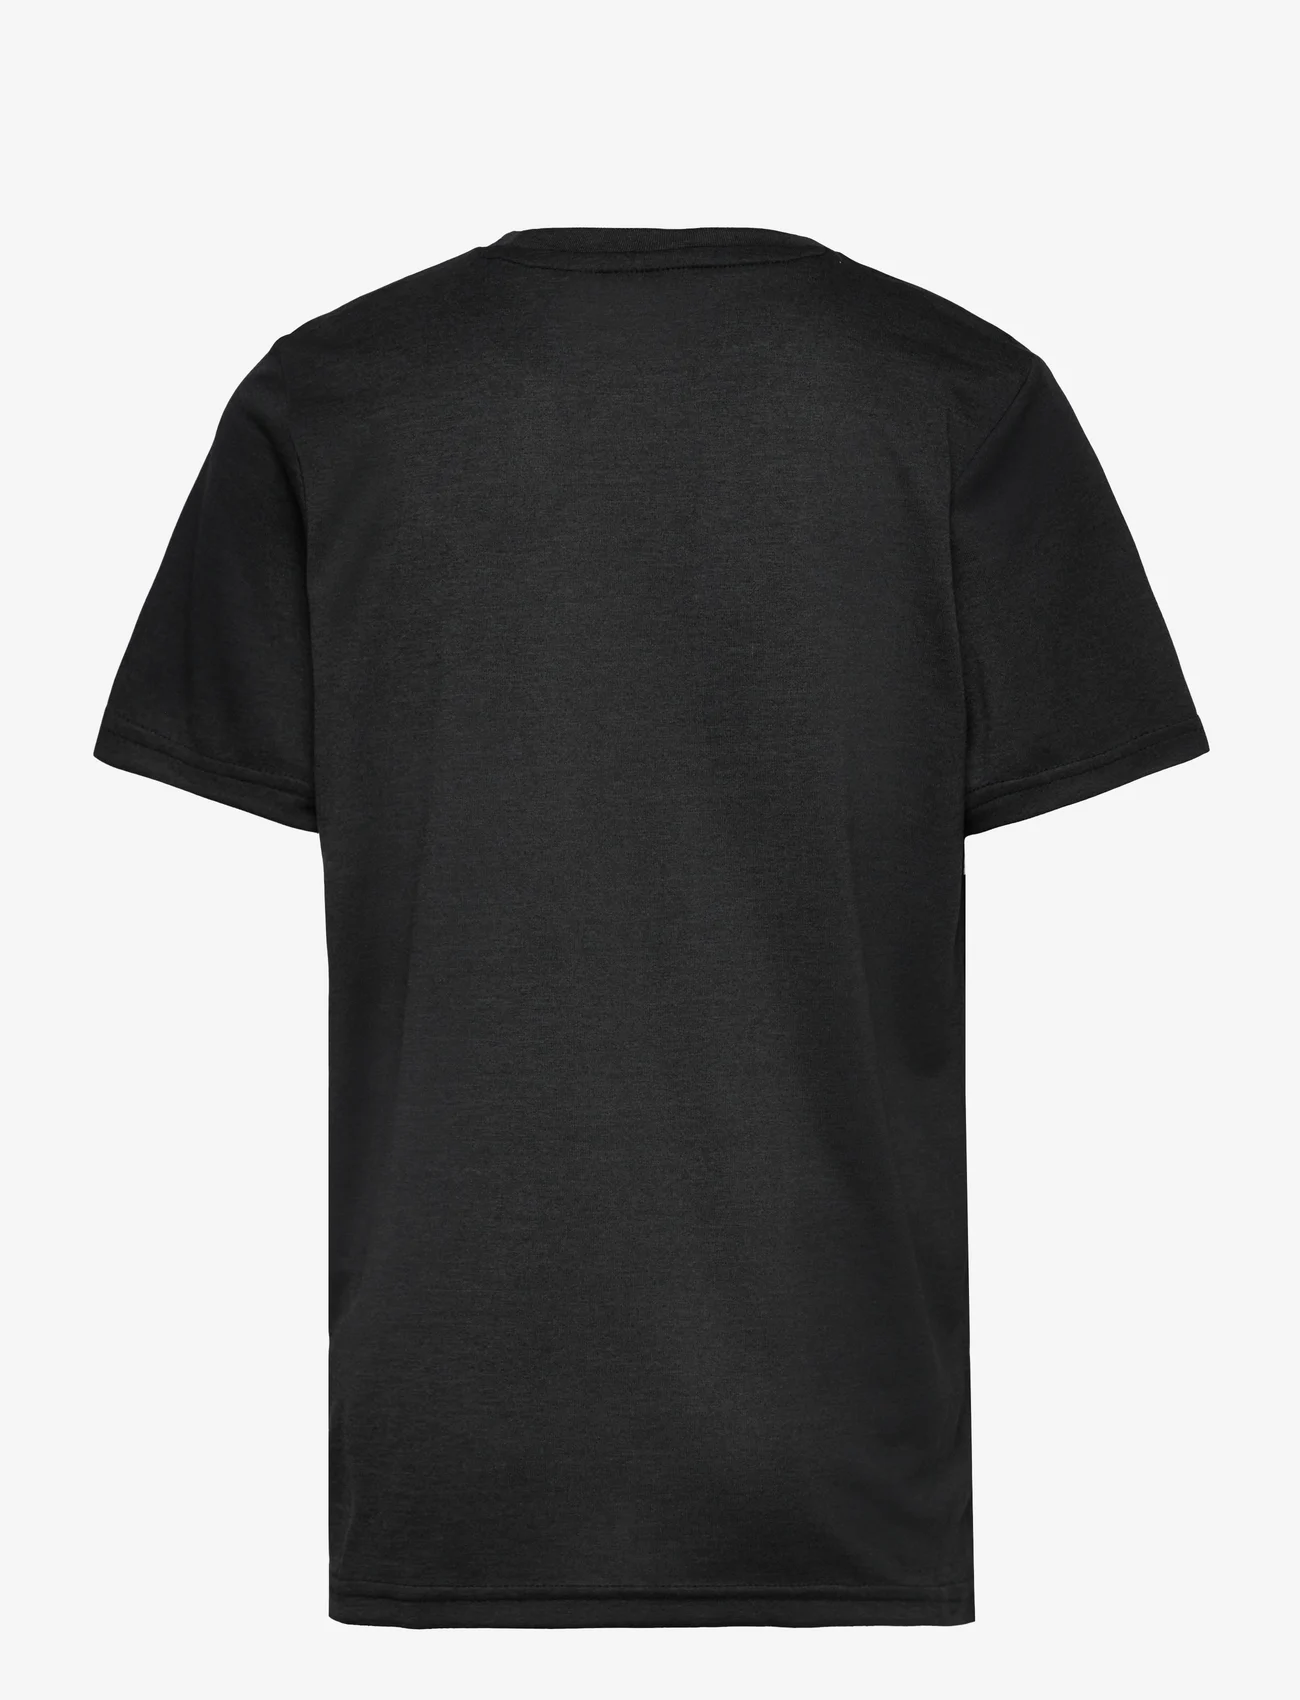 Hummel - hmlMUSTRAL T-SHIRT S/S - short-sleeved t-shirts - black - 1